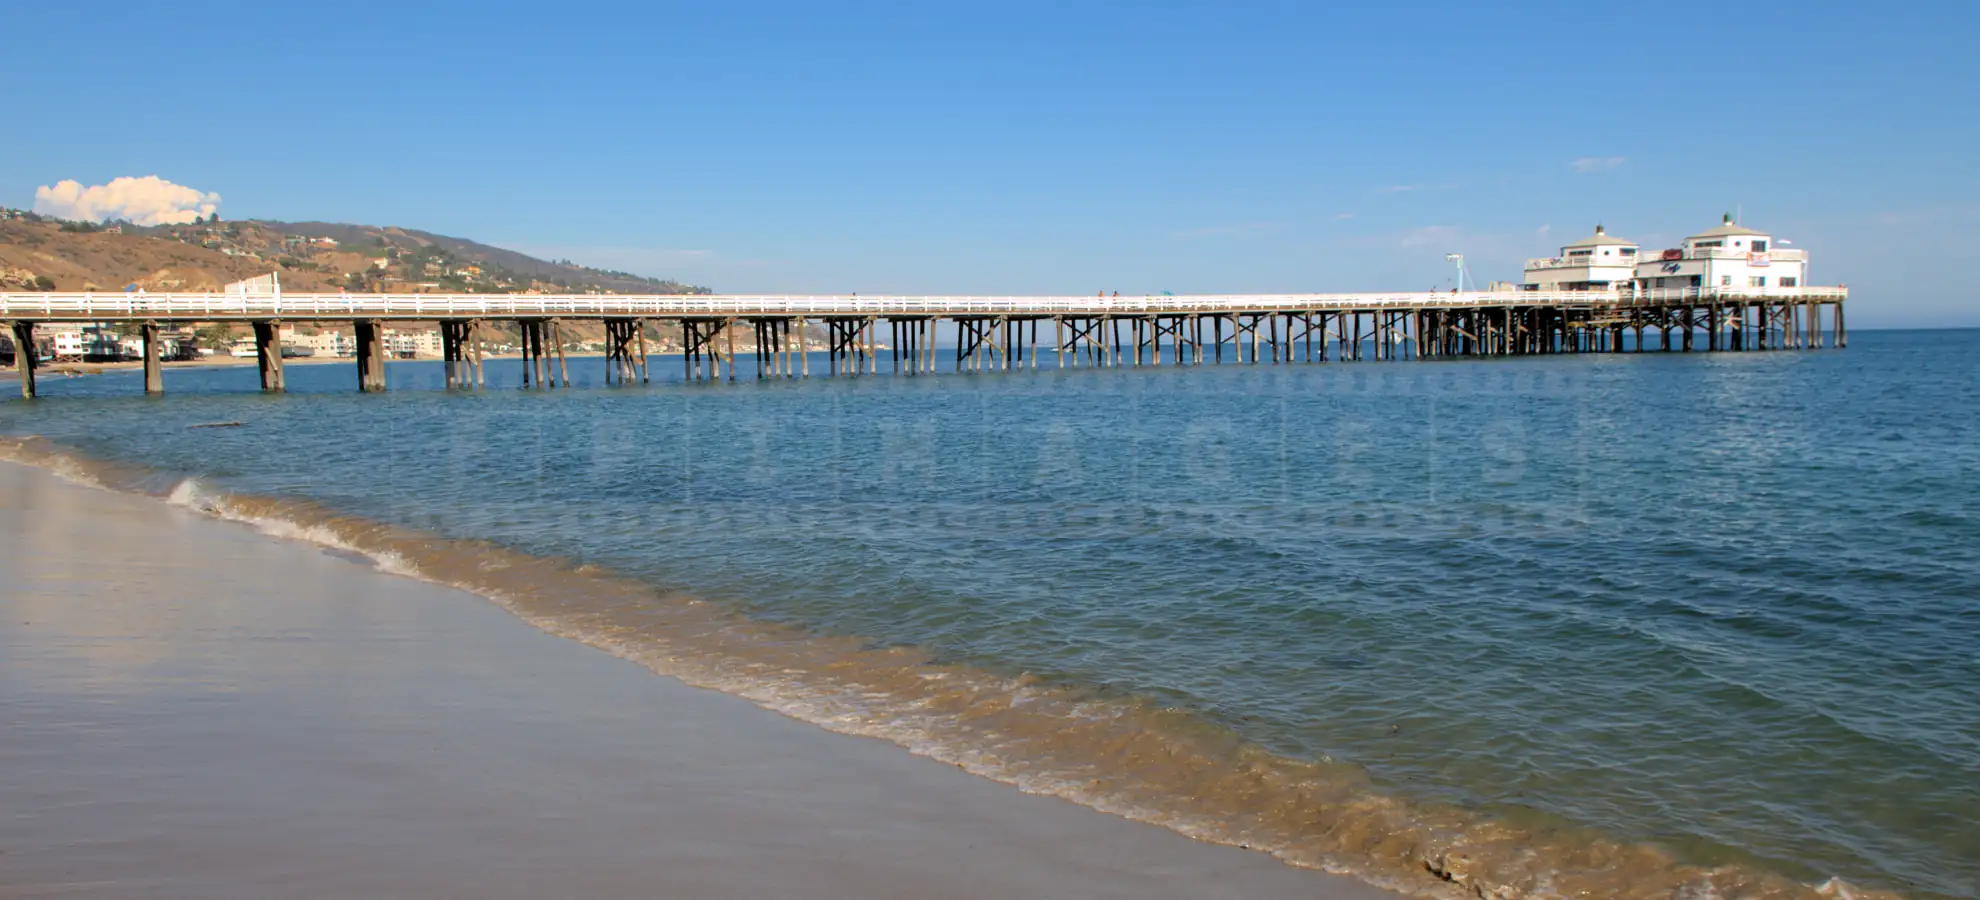 Malibu Pier and beautiful beach in California